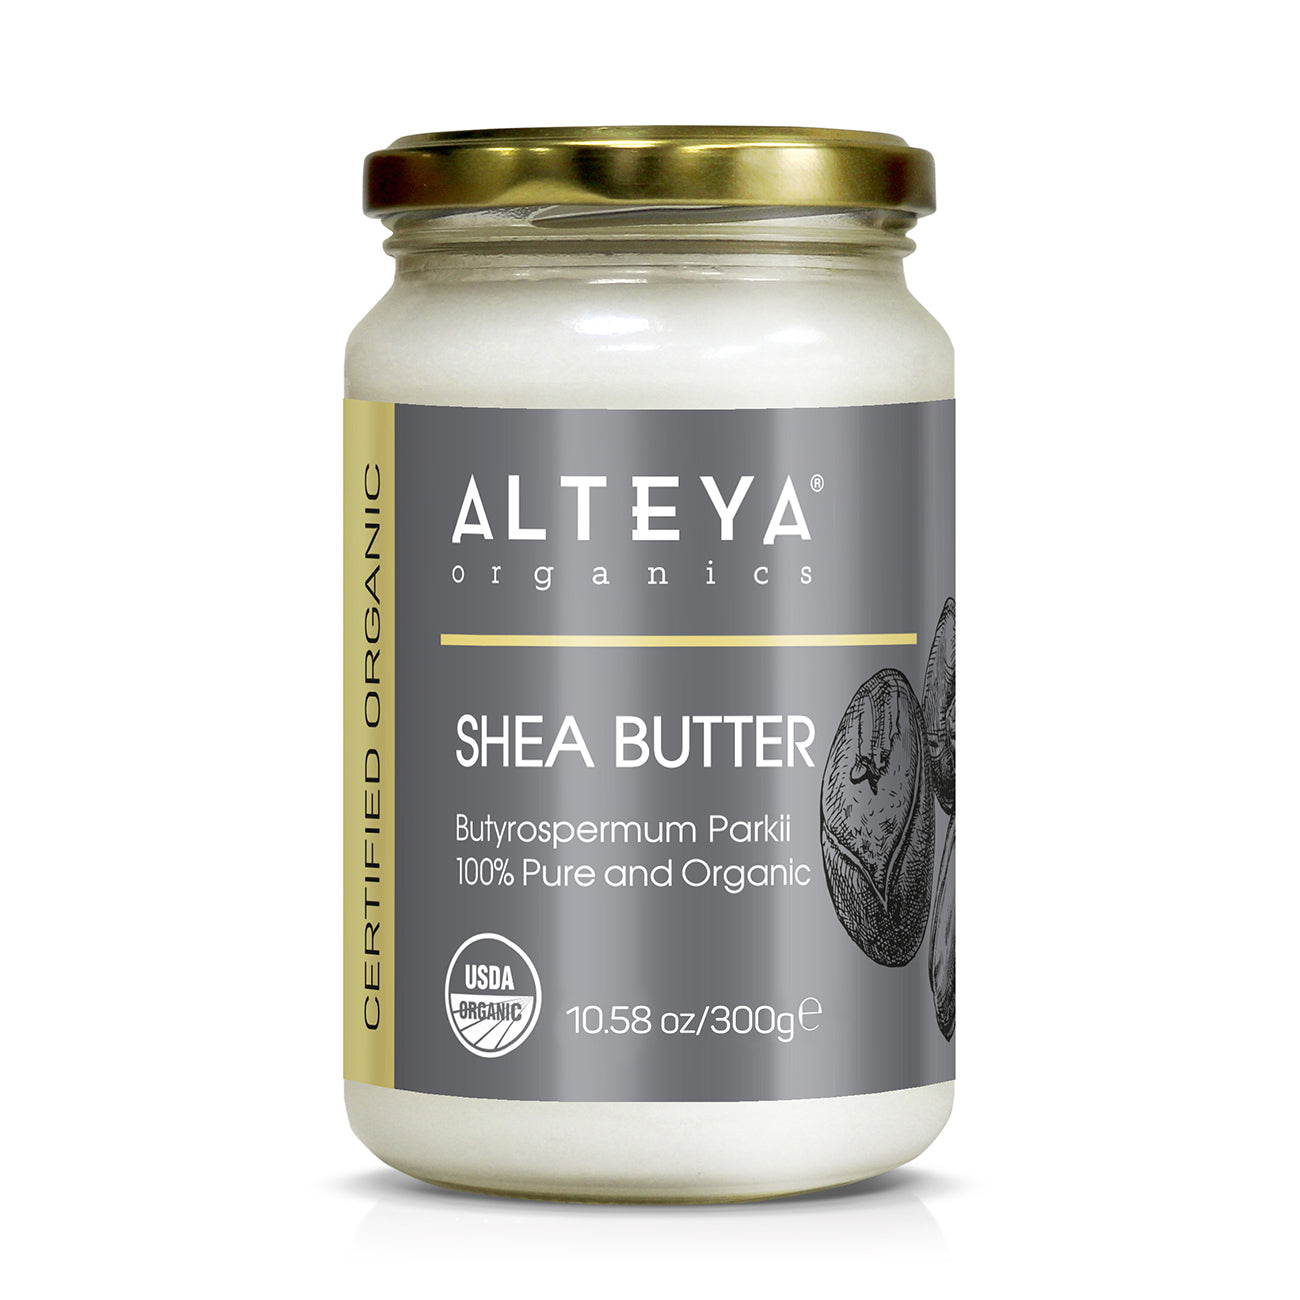 A jar of Alteya Organics' Shea Butter - USDA Organic - 10.58 Oz/300g Glass Jar, known for its moisturizing properties, on a white background.